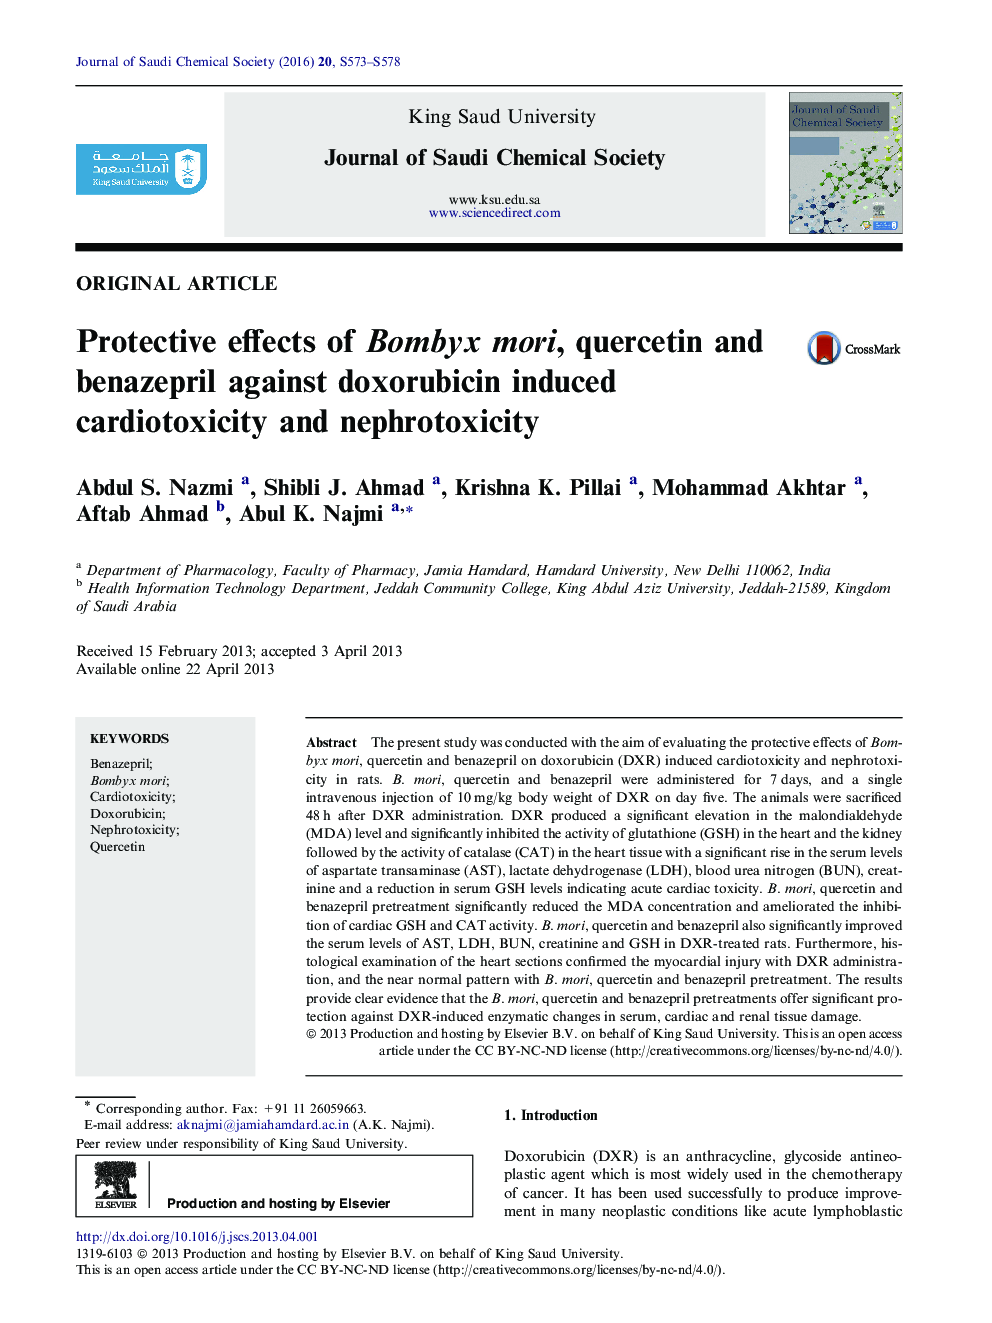 Protective effects of Bombyx mori, quercetin and benazepril against doxorubicin induced cardiotoxicity and nephrotoxicity